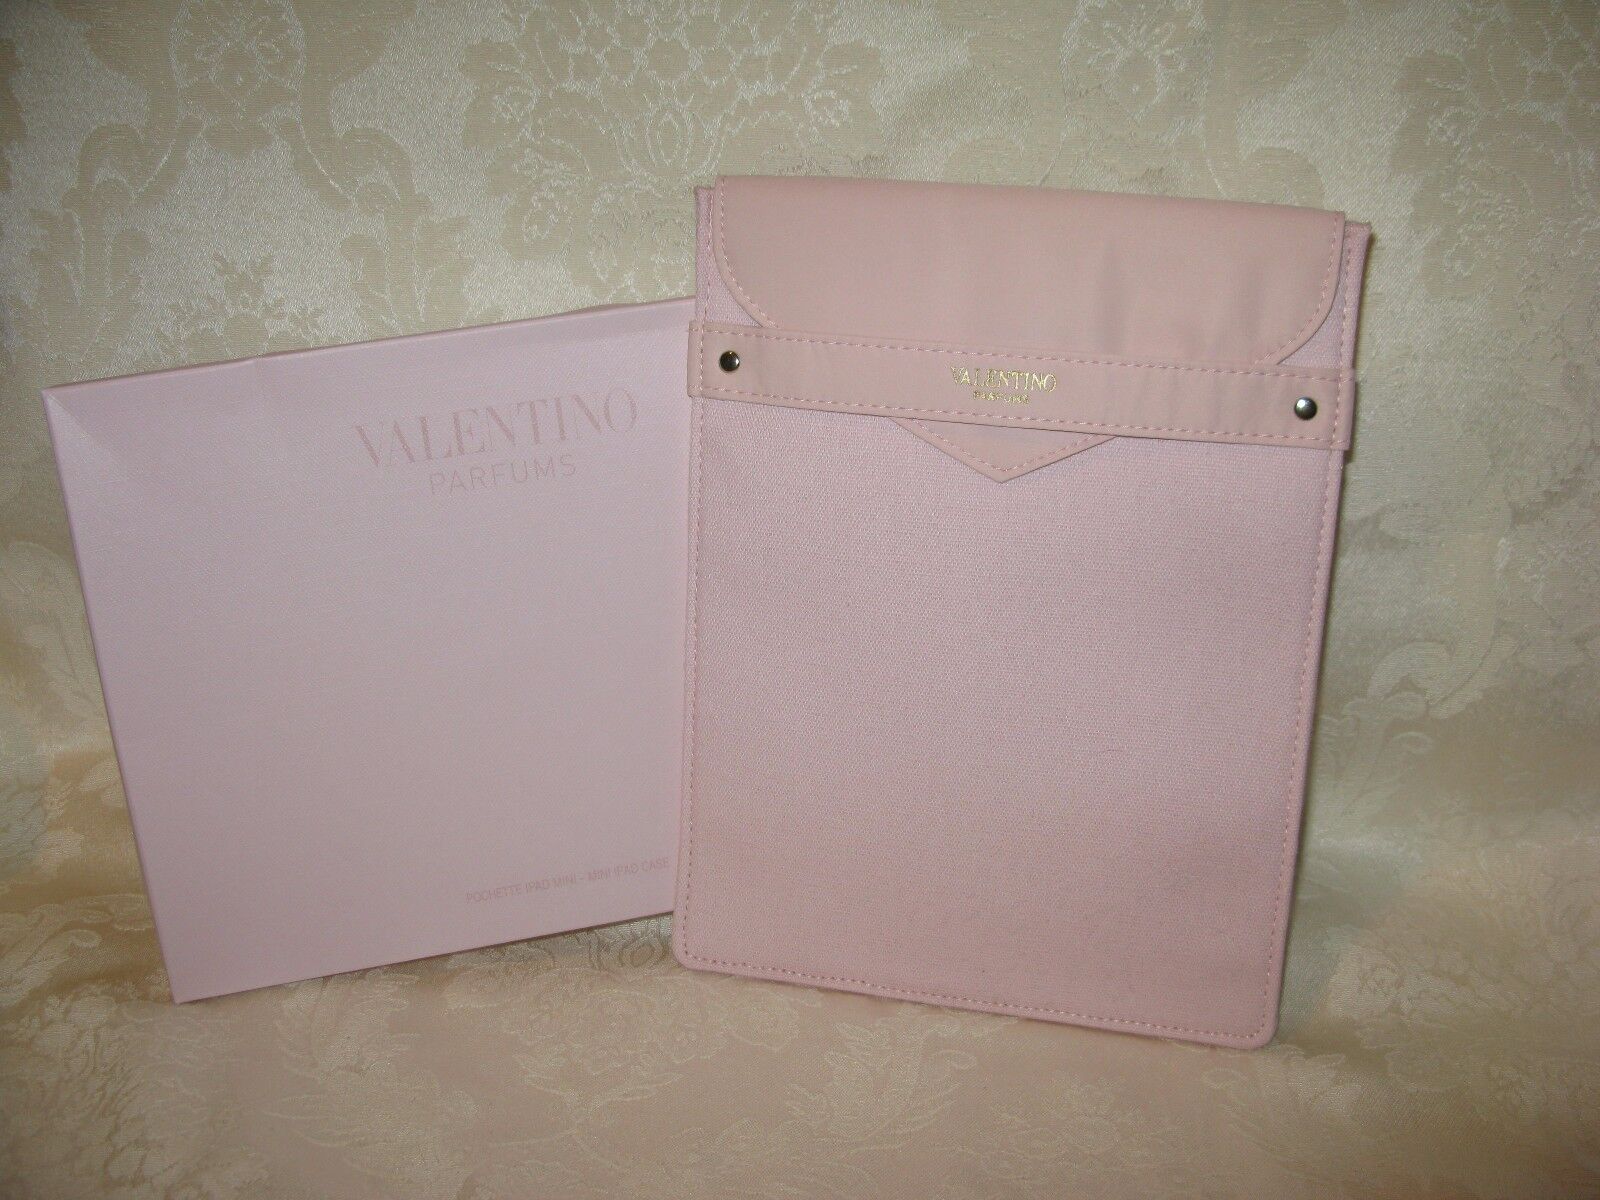 Valentino Parfums Pink Mini iPad Case. New.